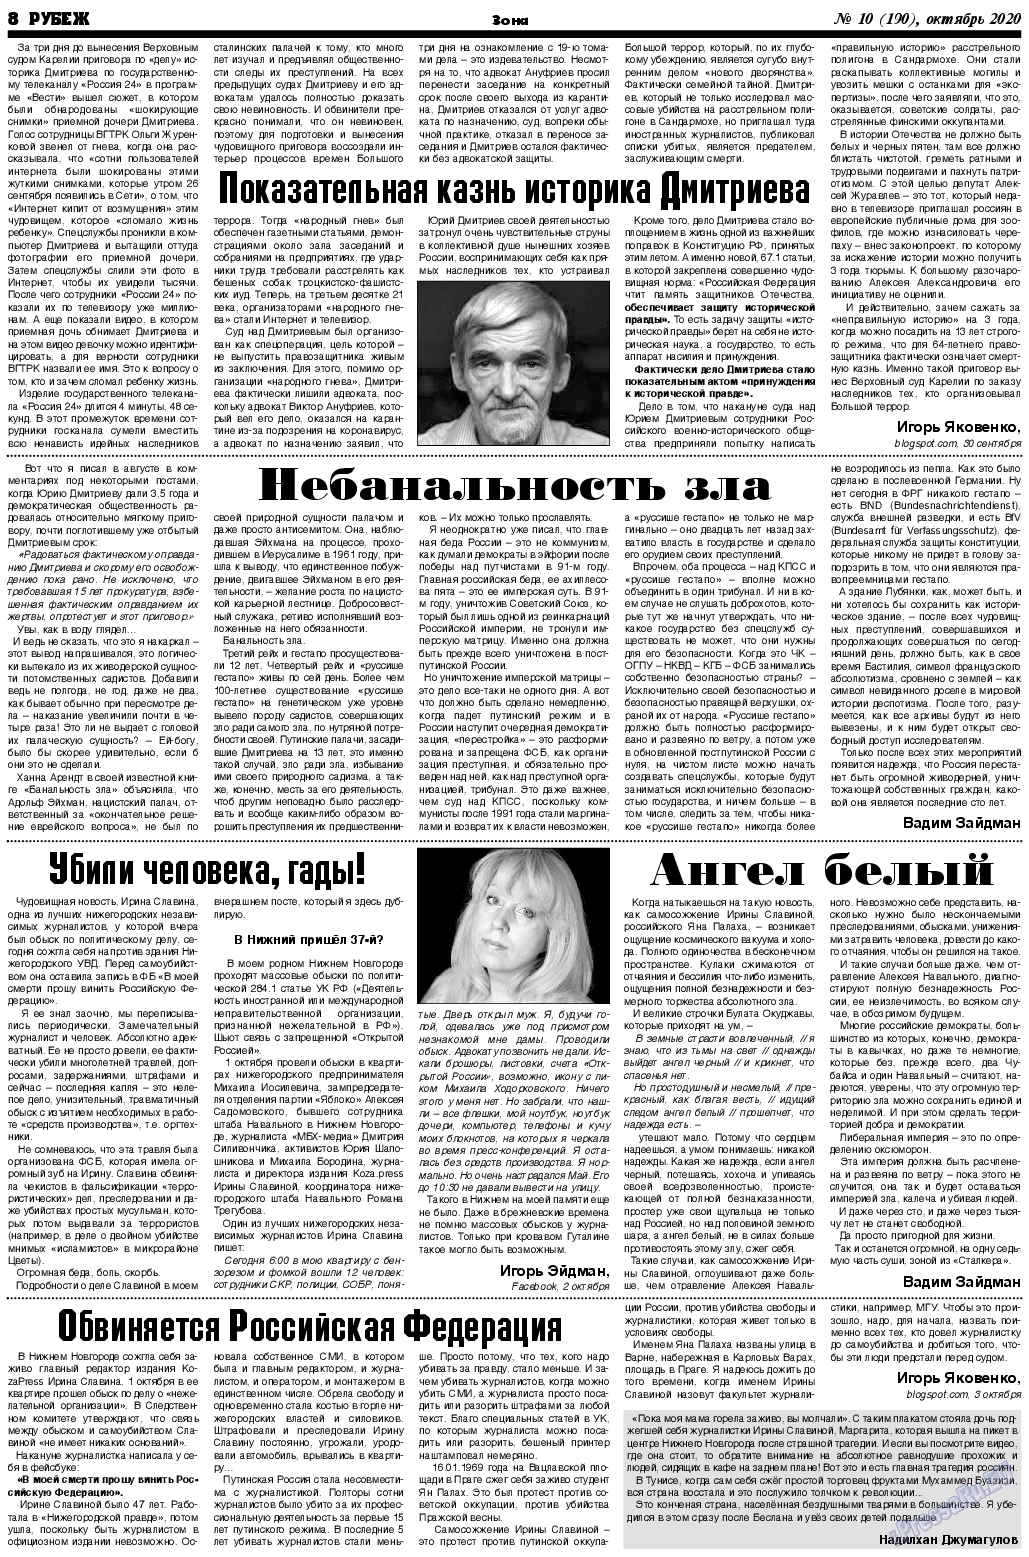 Рубеж, газета. 2020 №10 стр.8